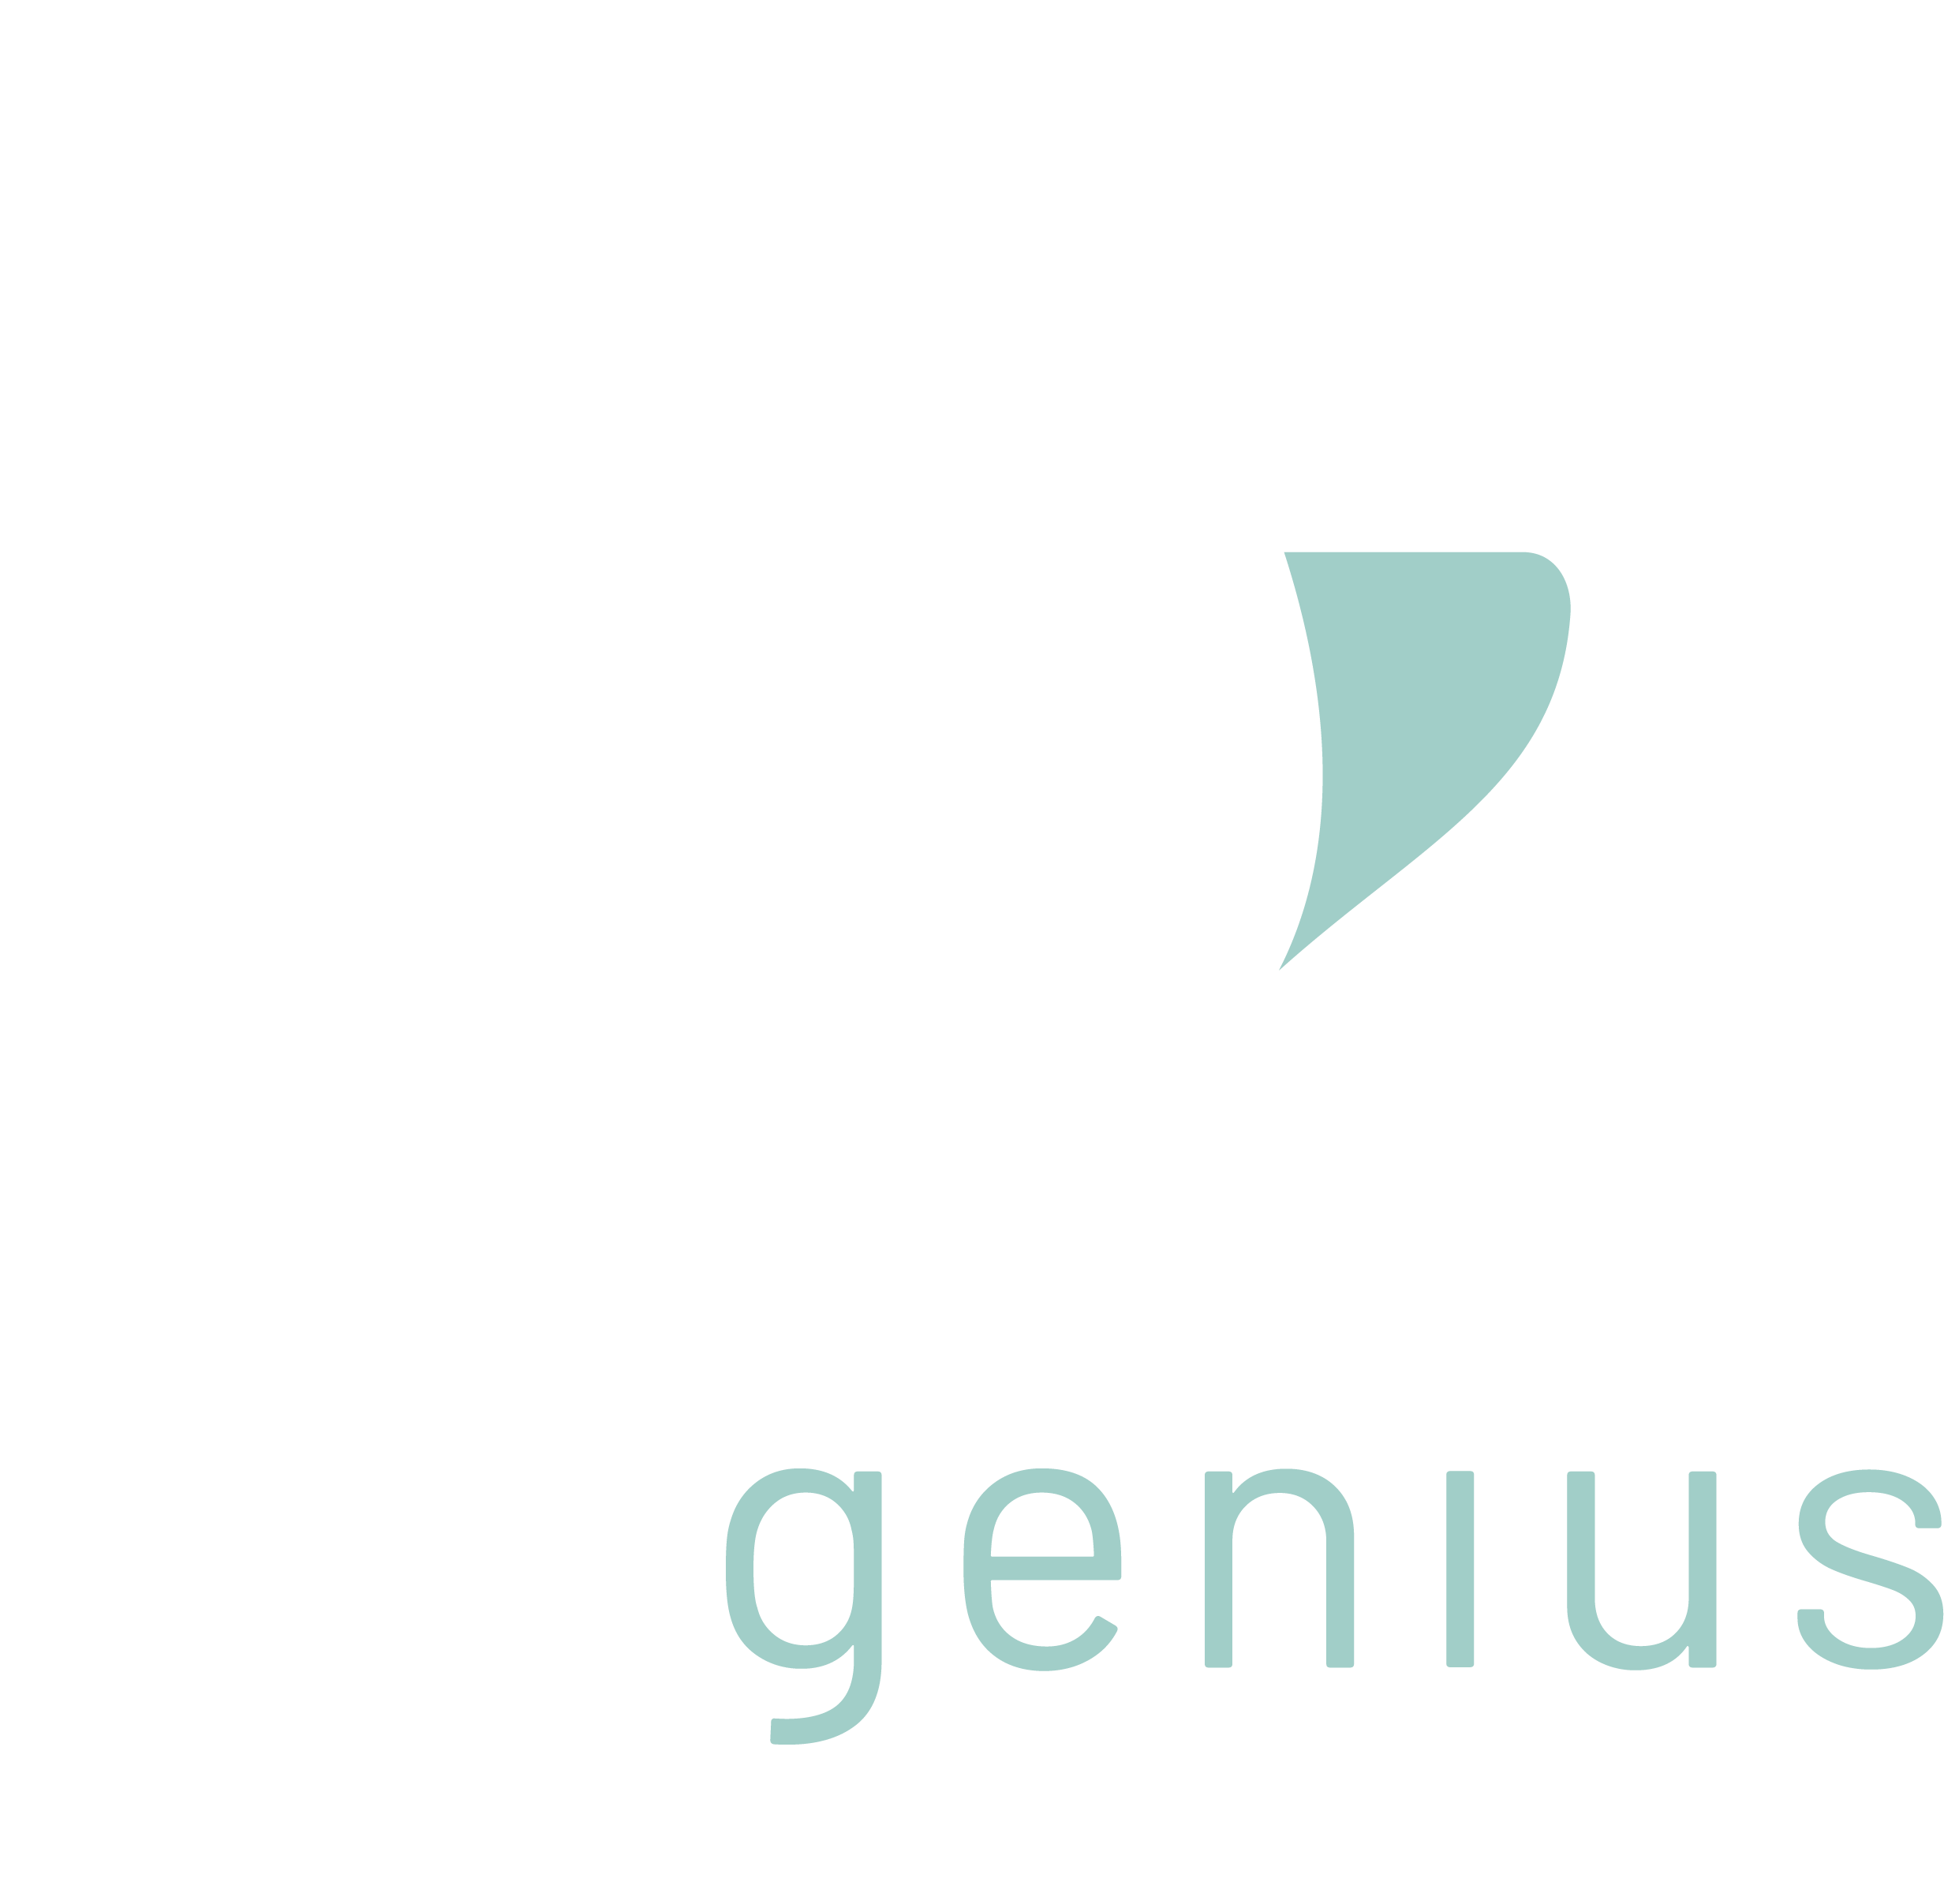 PANGEnius-logo